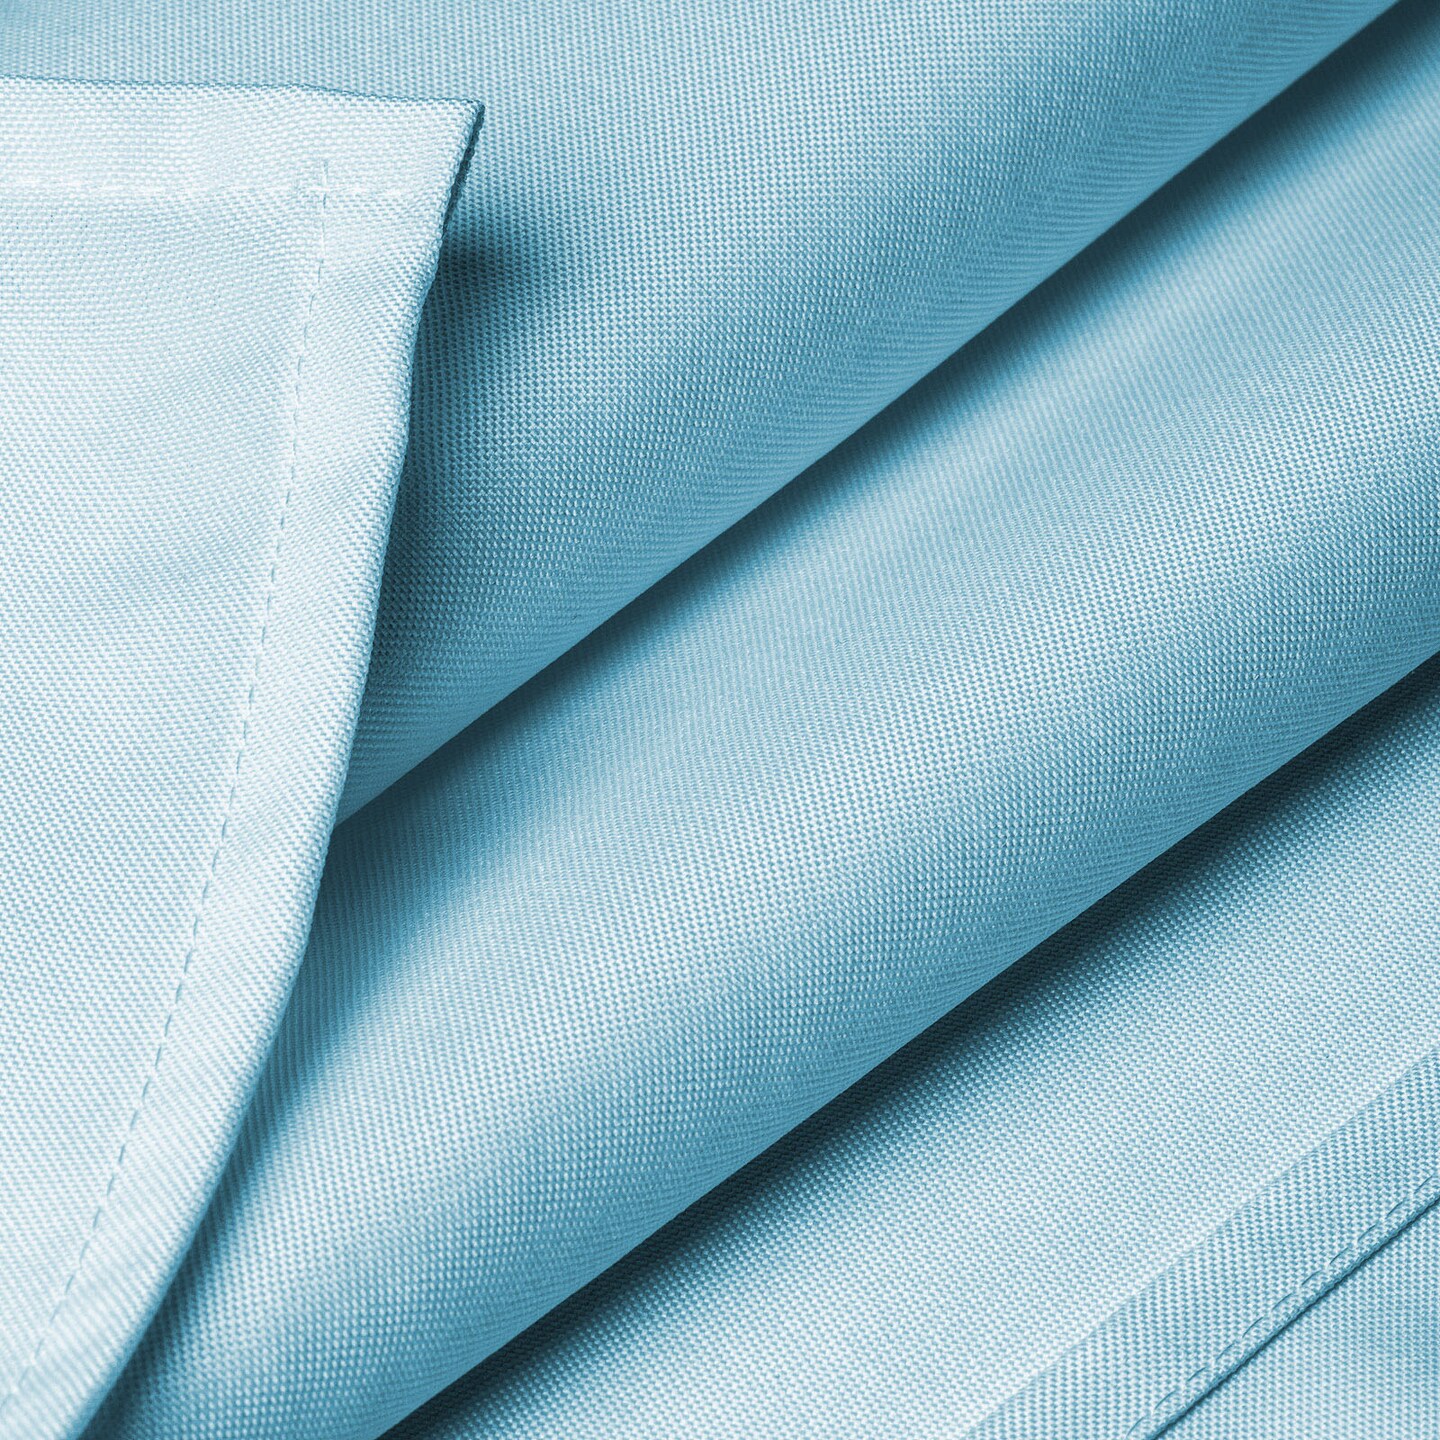 Lann&#x27;s Linens - 5 Premium Tablecloths for Wedding/Banquet/Restaurant - Rectangular Polyester Fabric Table Cloths